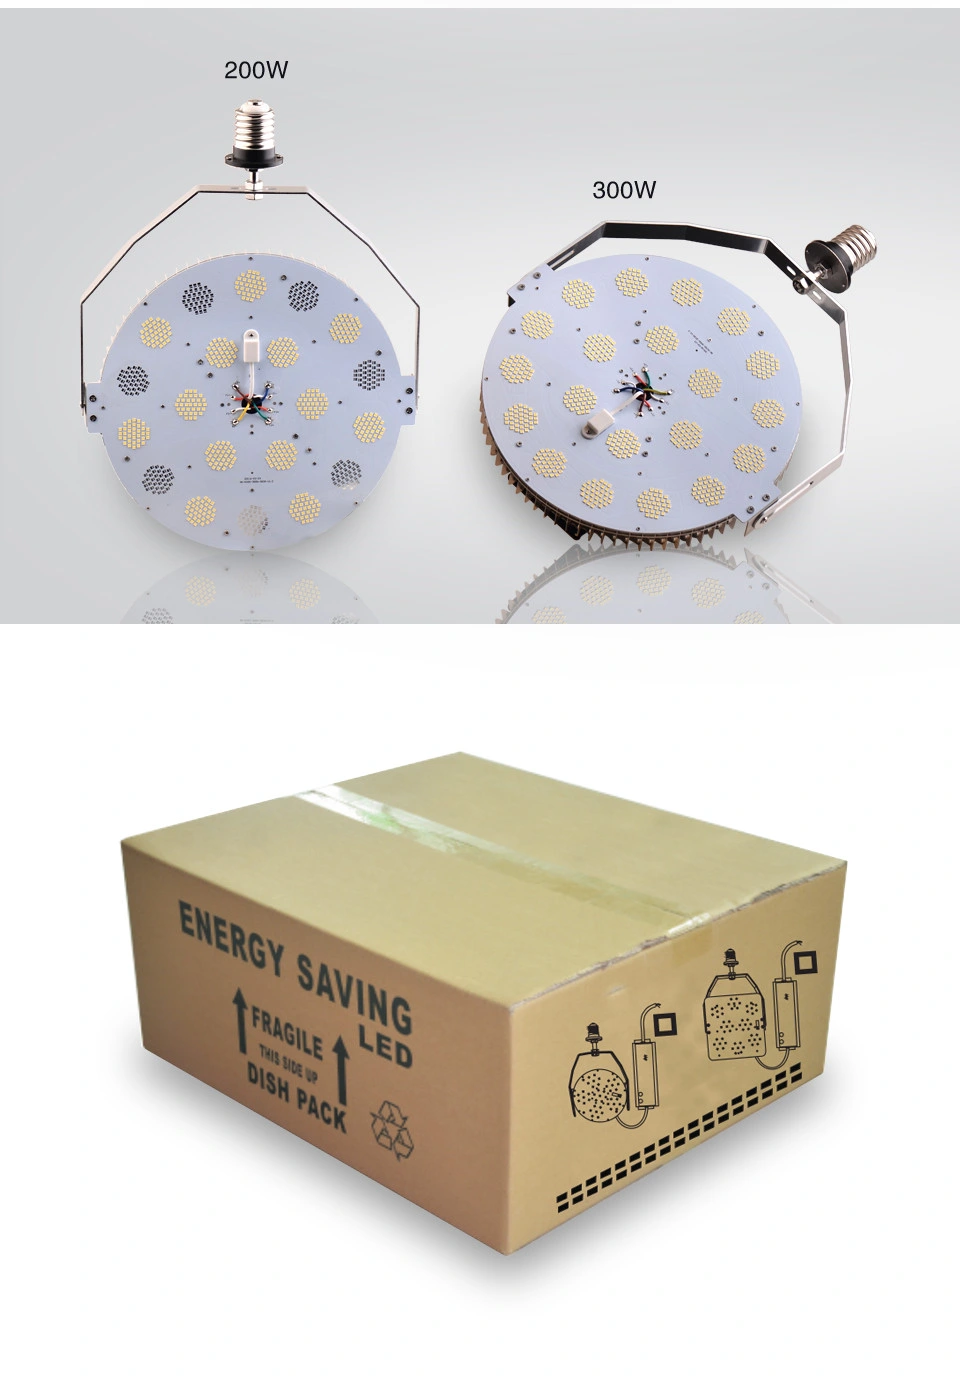 120W E40 LED Retrofit Kit Light Source for Street Light with UL Dlc Listed